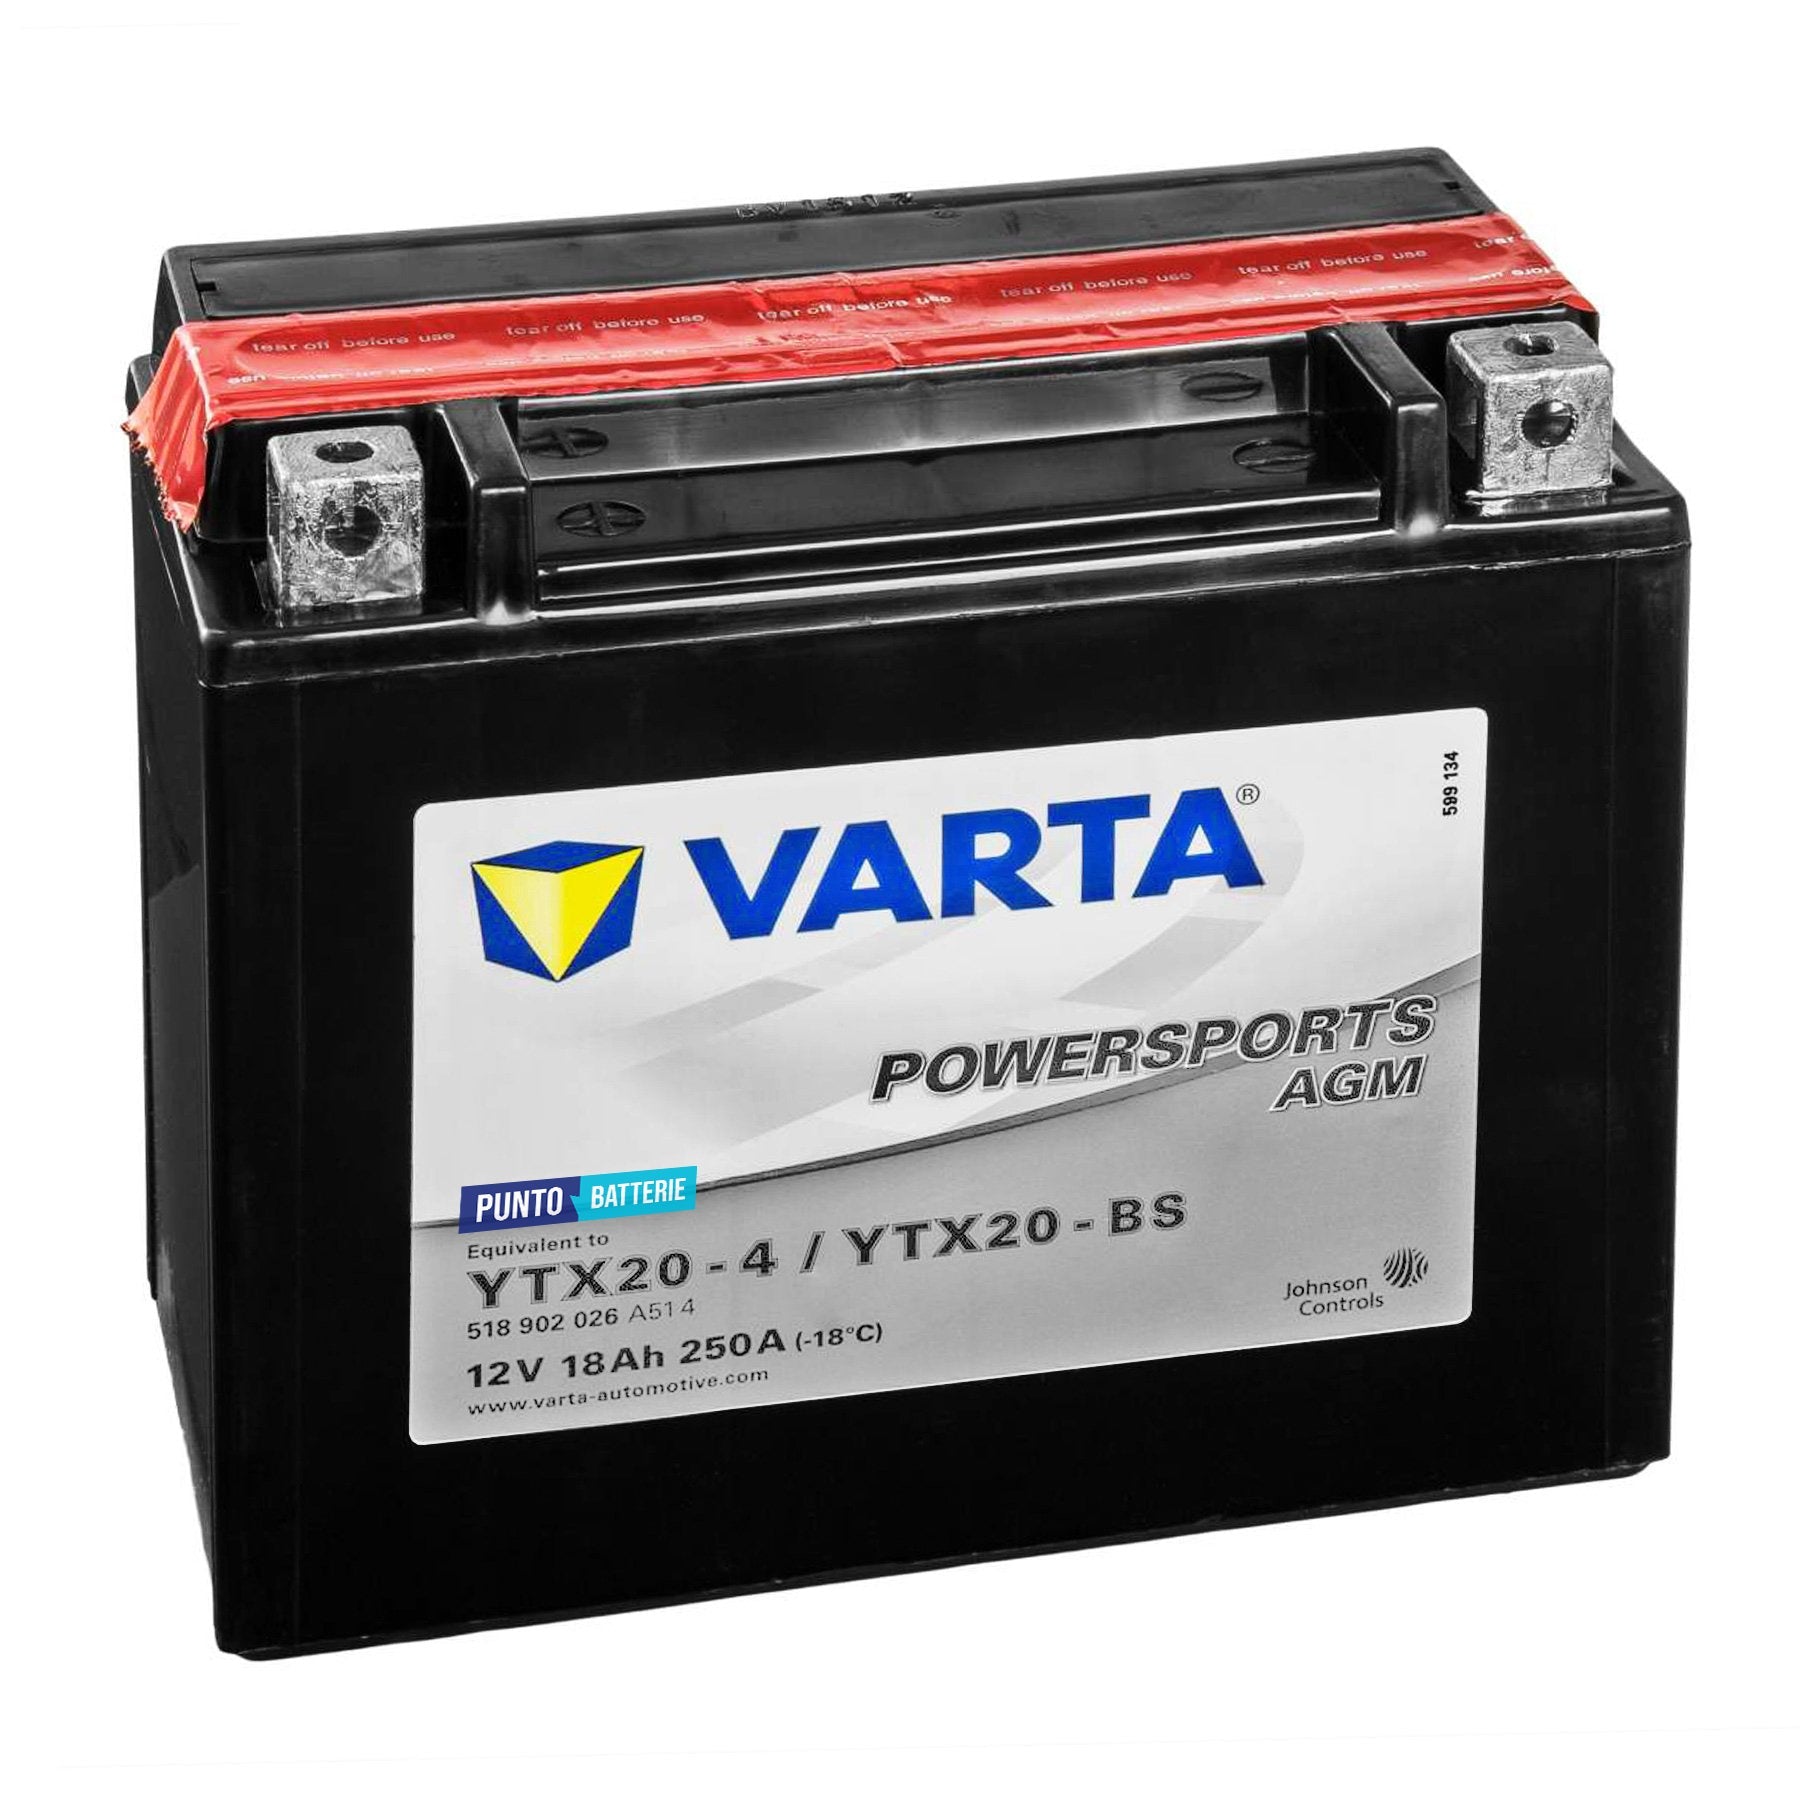 Batteria originale Varta Powersport AGM YTX20-4, dimensioni 152 x 88 x 131, polo positivo a sinistra, 12 volt, 18 amperora, 250 ampere. Batteria per moto, scooter e powersport.